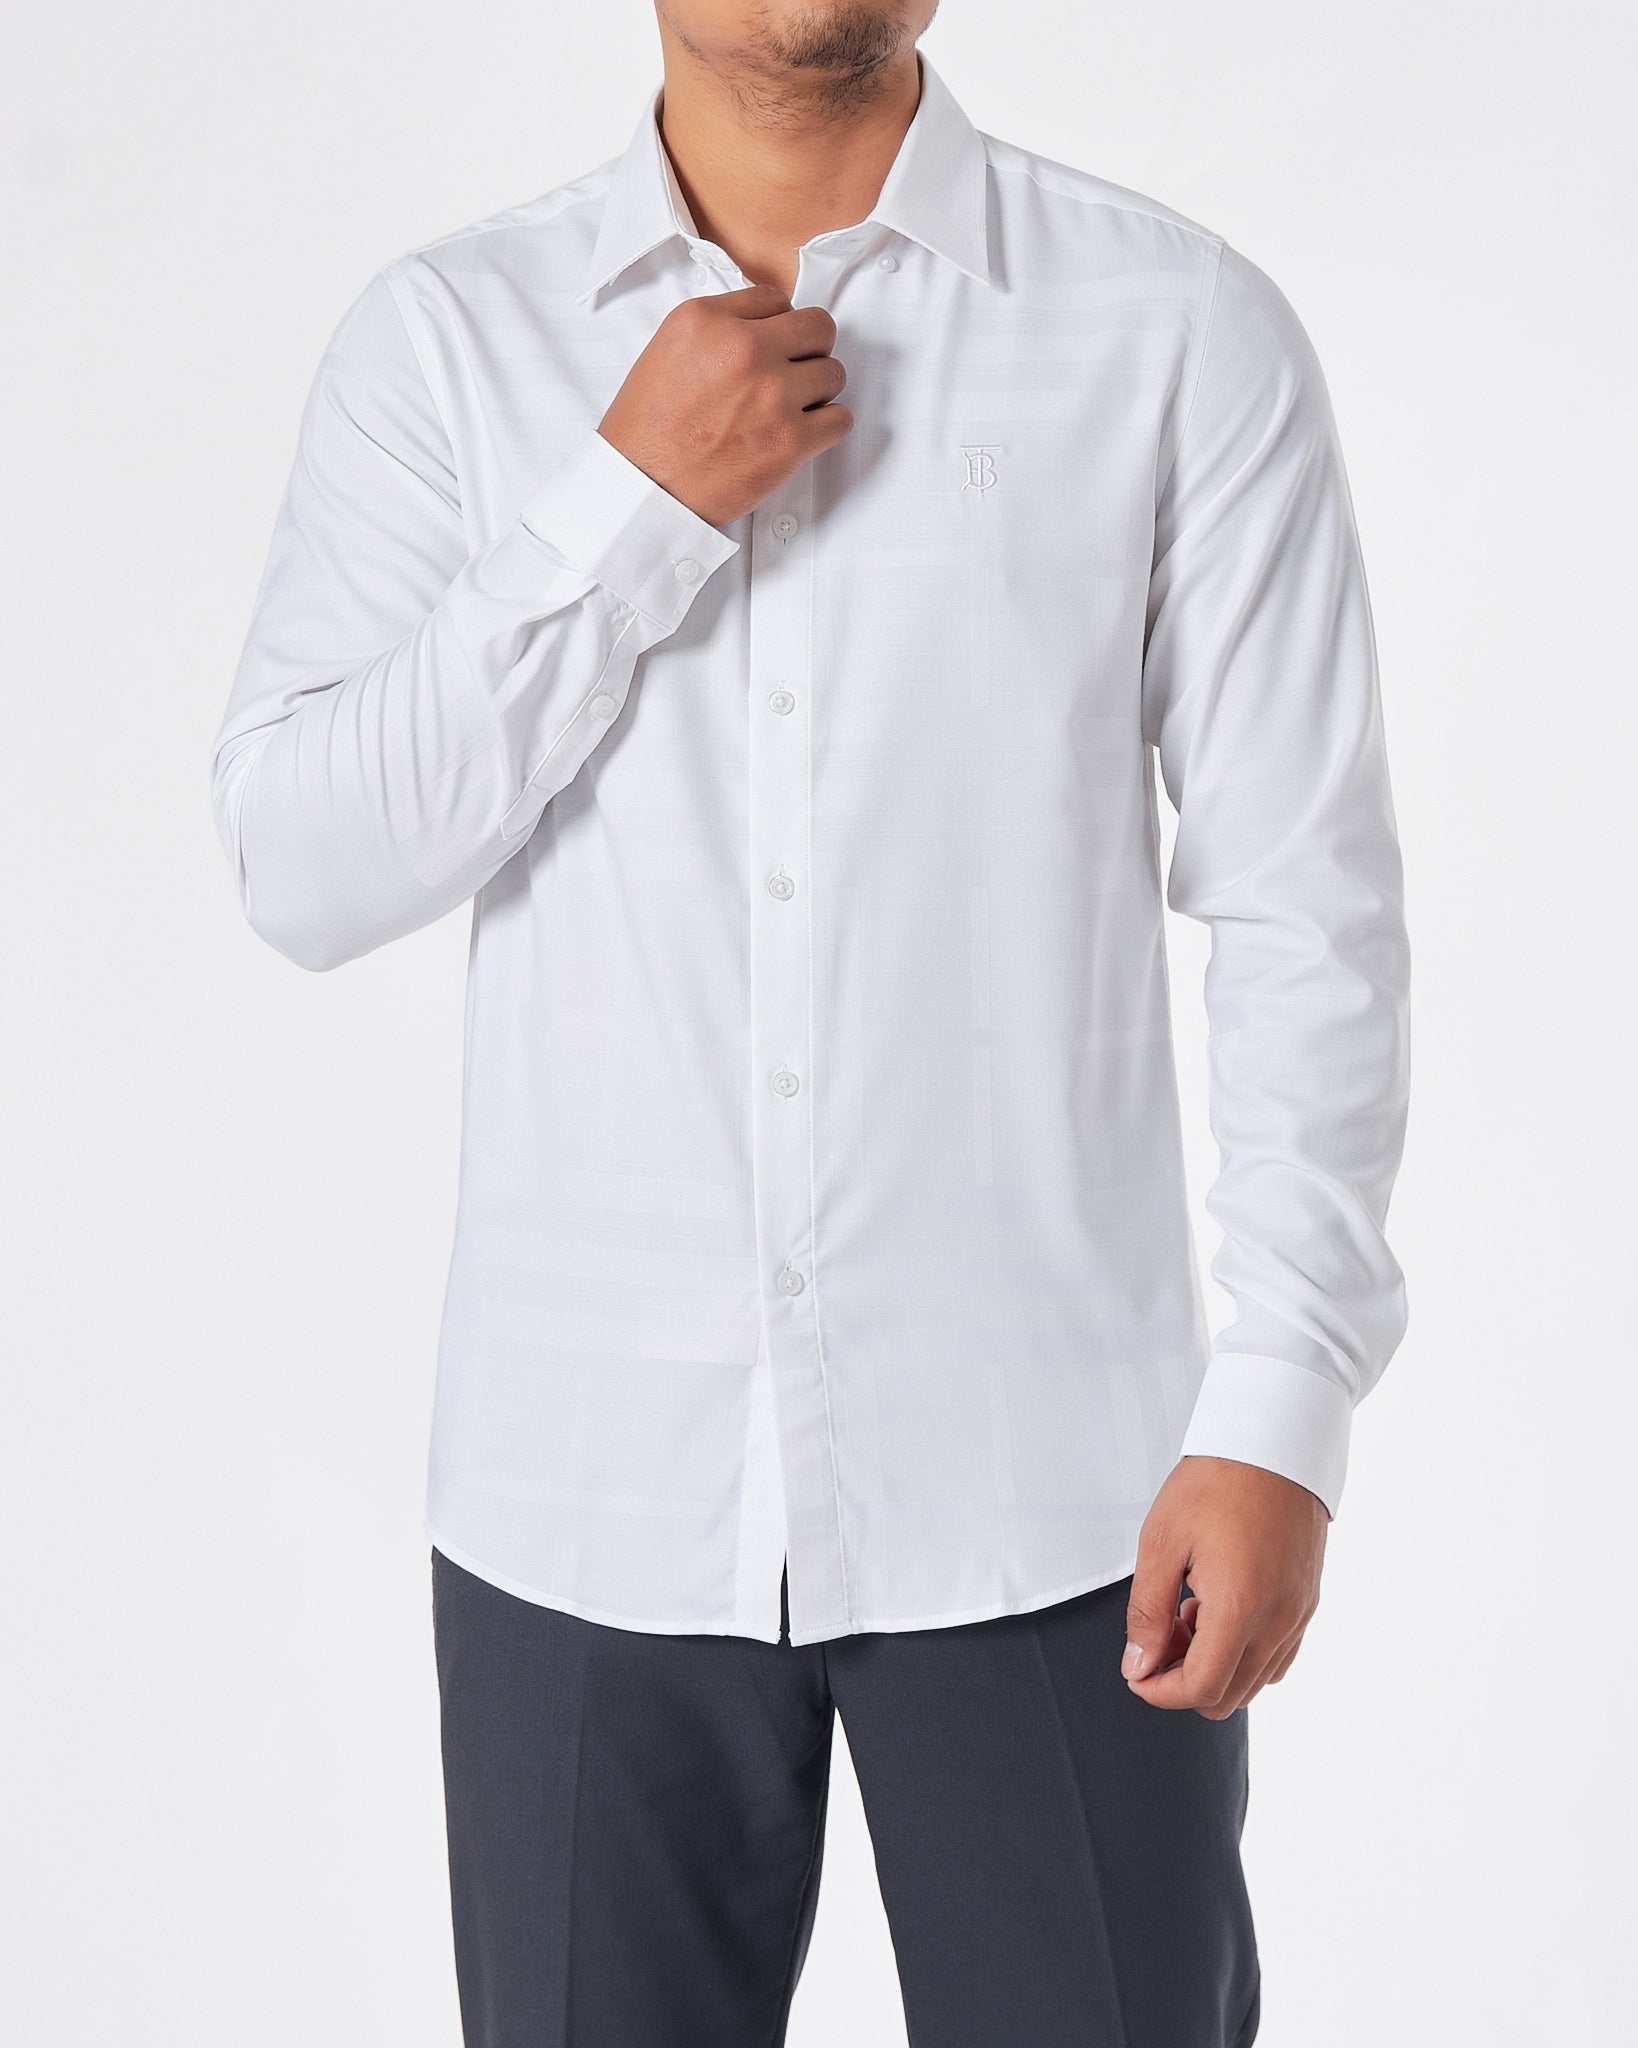 BUR Logo Embroidered Striped Men White Shirts Long Sleeve 26.90